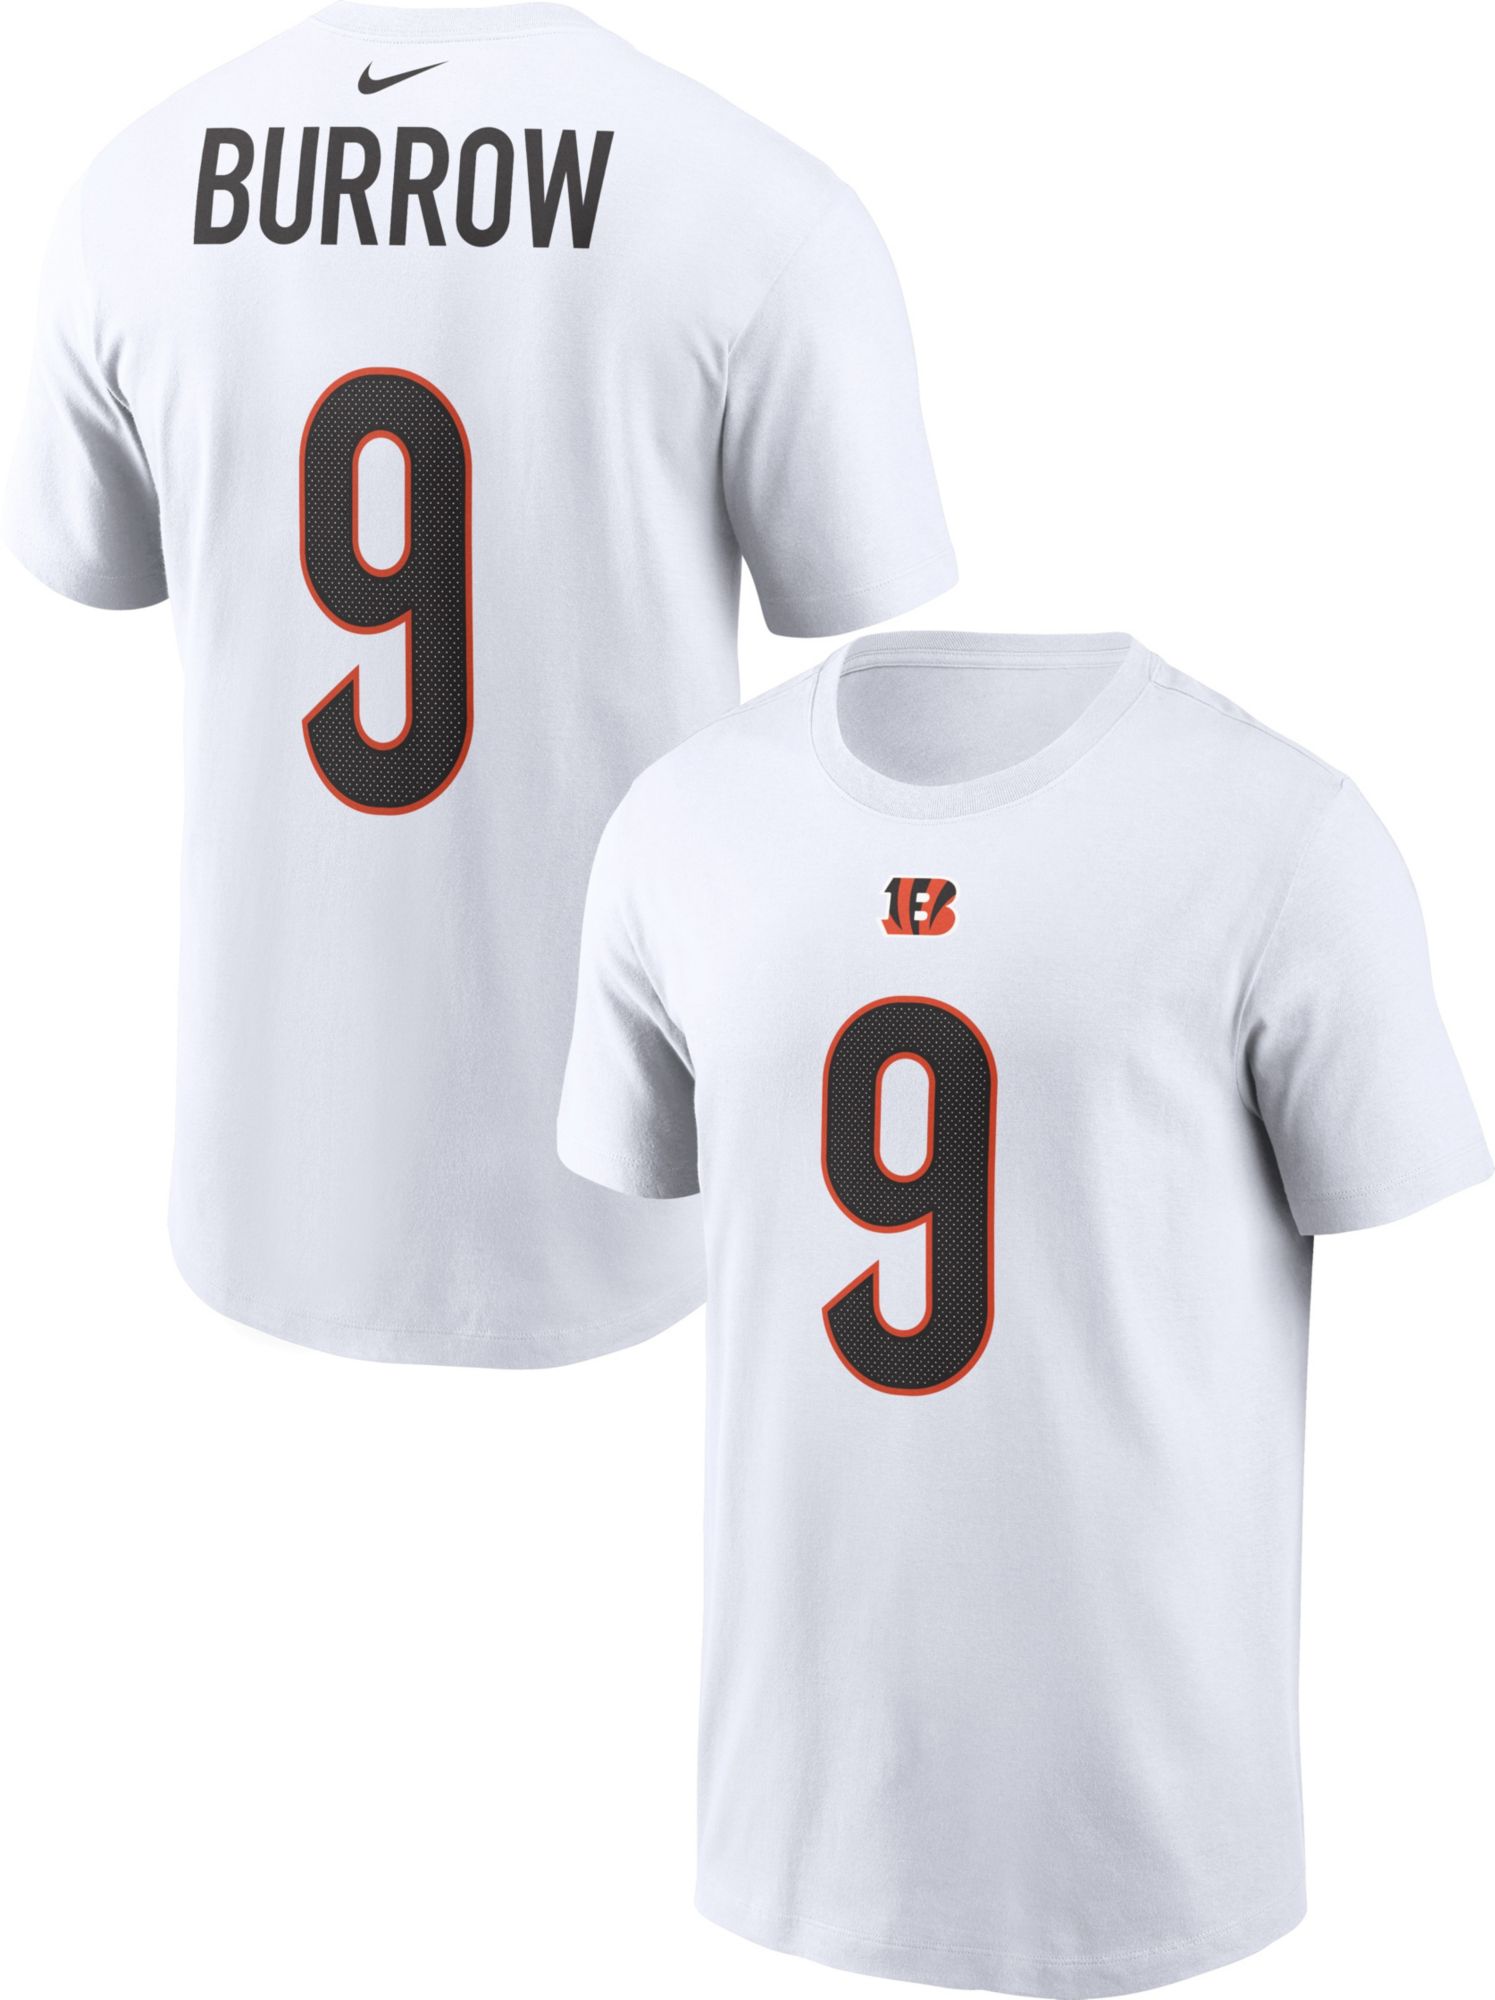 Nike / Men's Pittsburgh Pirates Ke'Bryan Hayes #13 Black T-Shirt